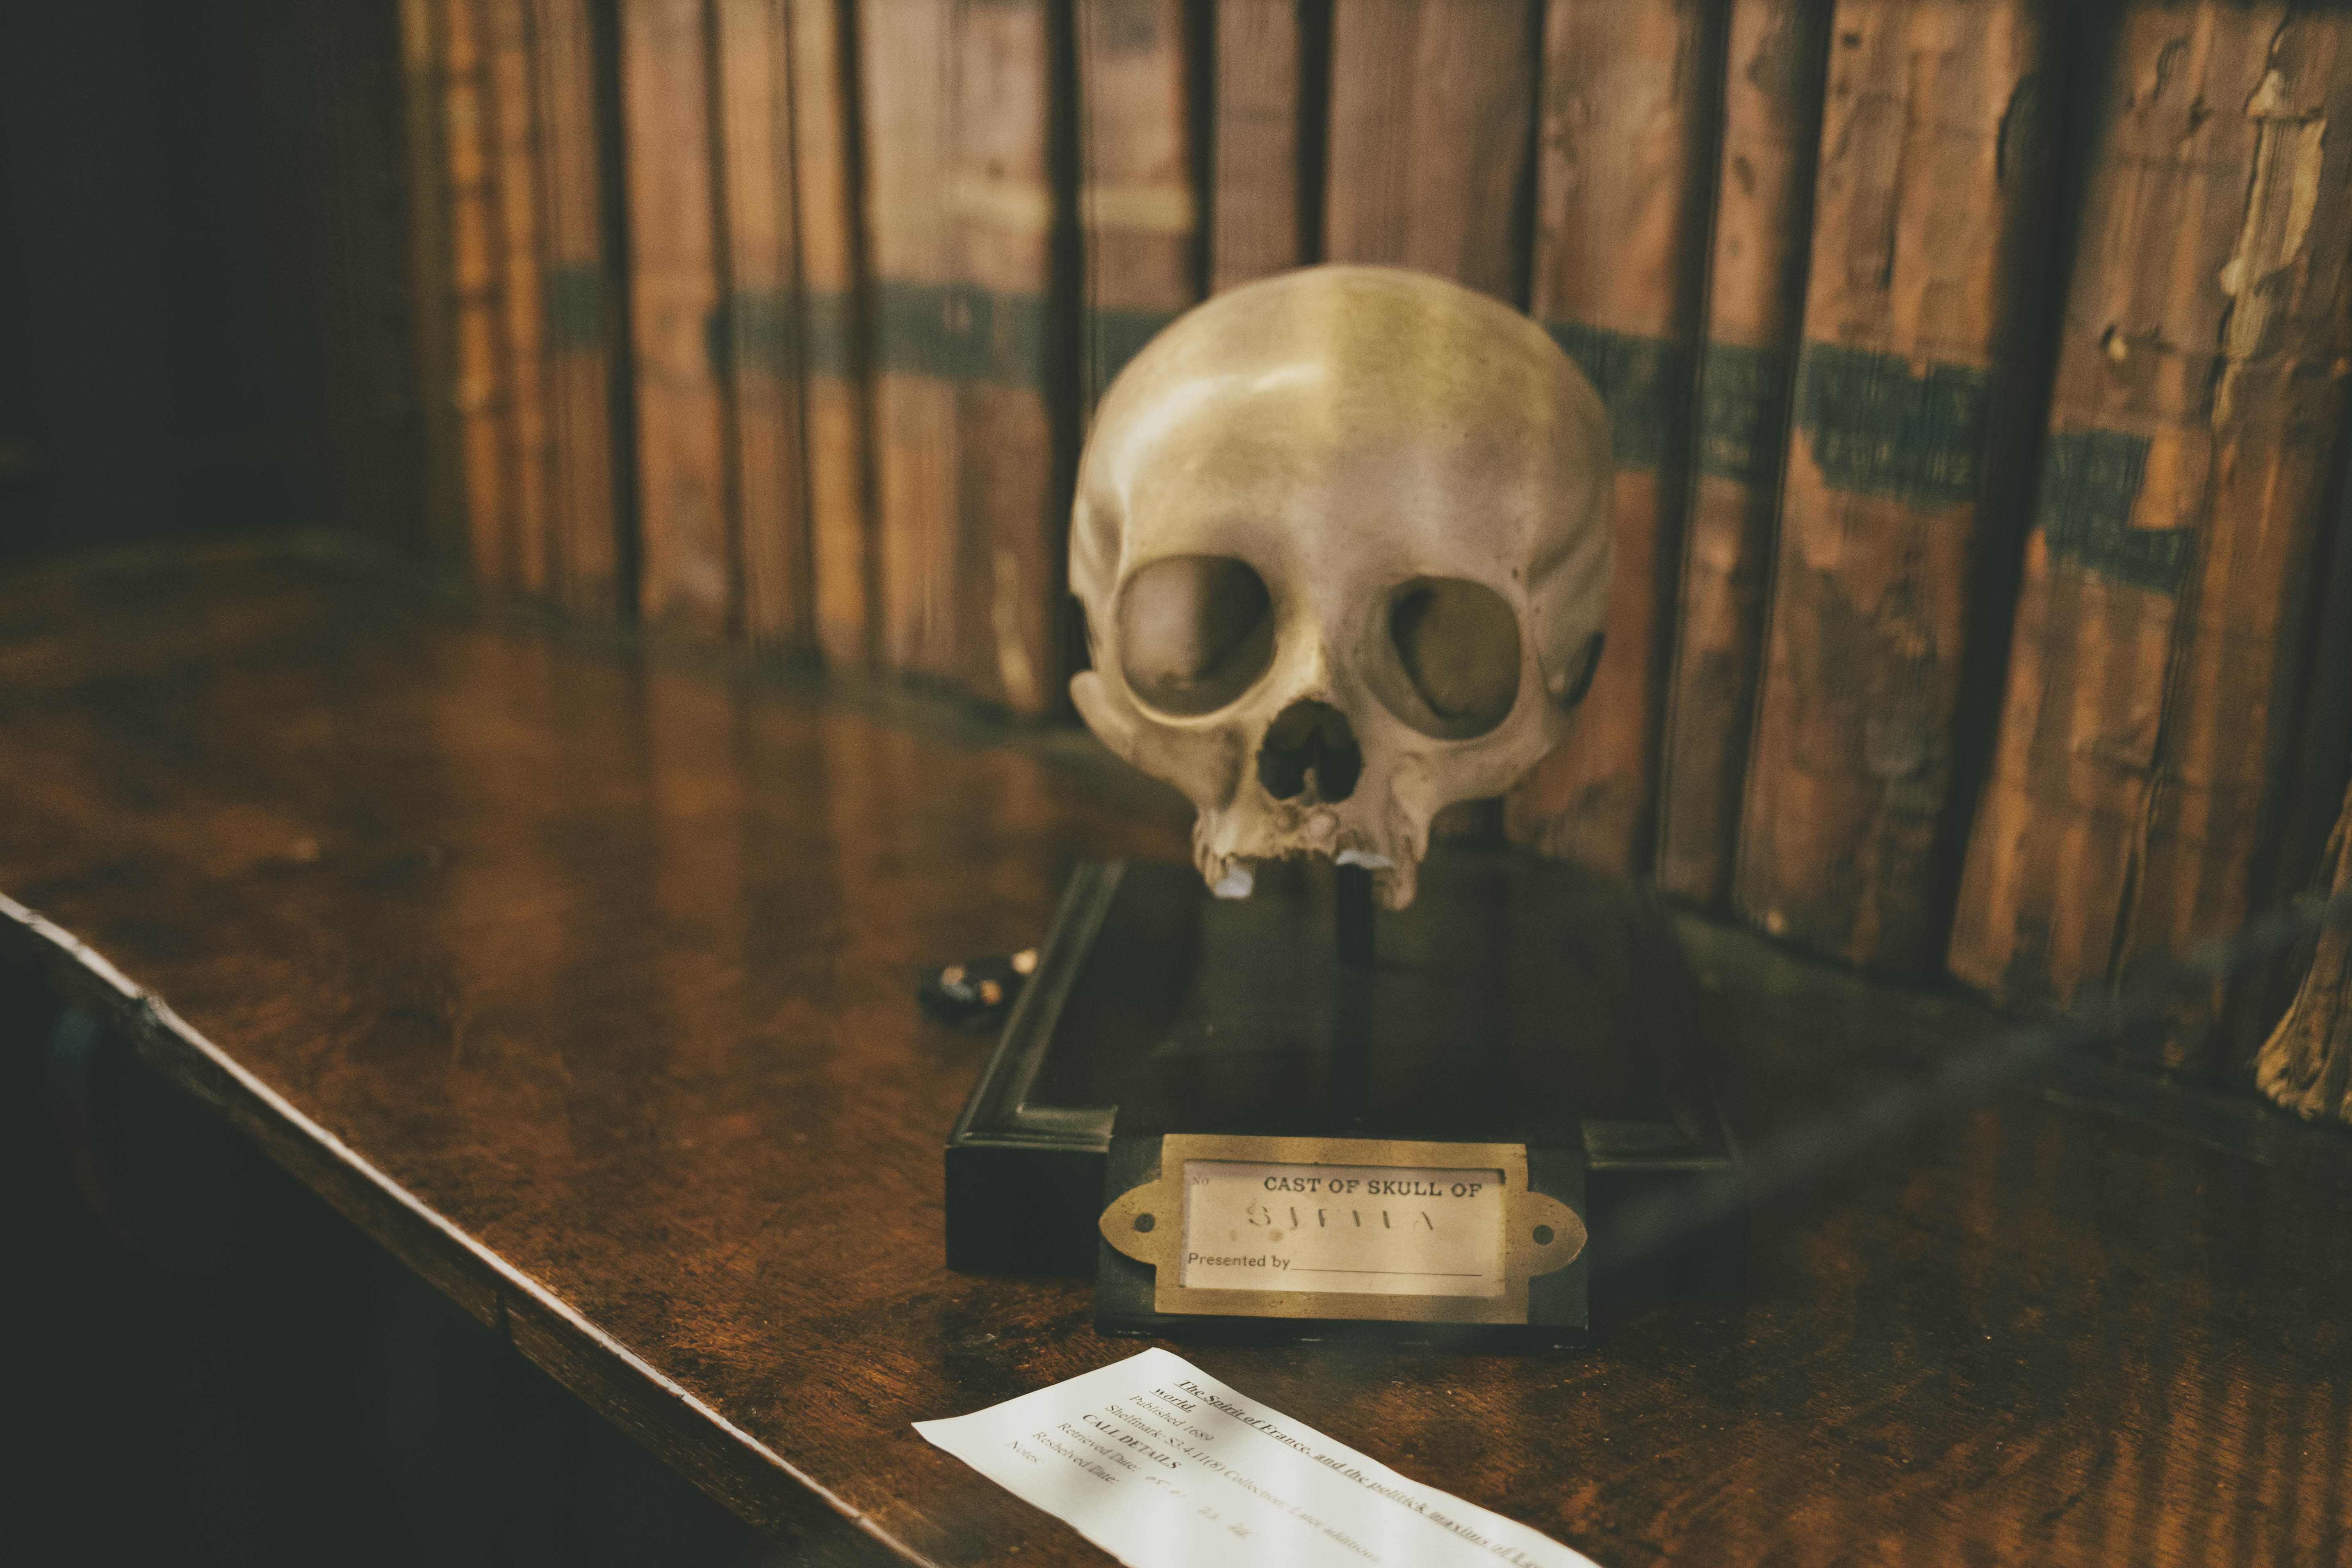 Caste of a human skull on a bookshelf